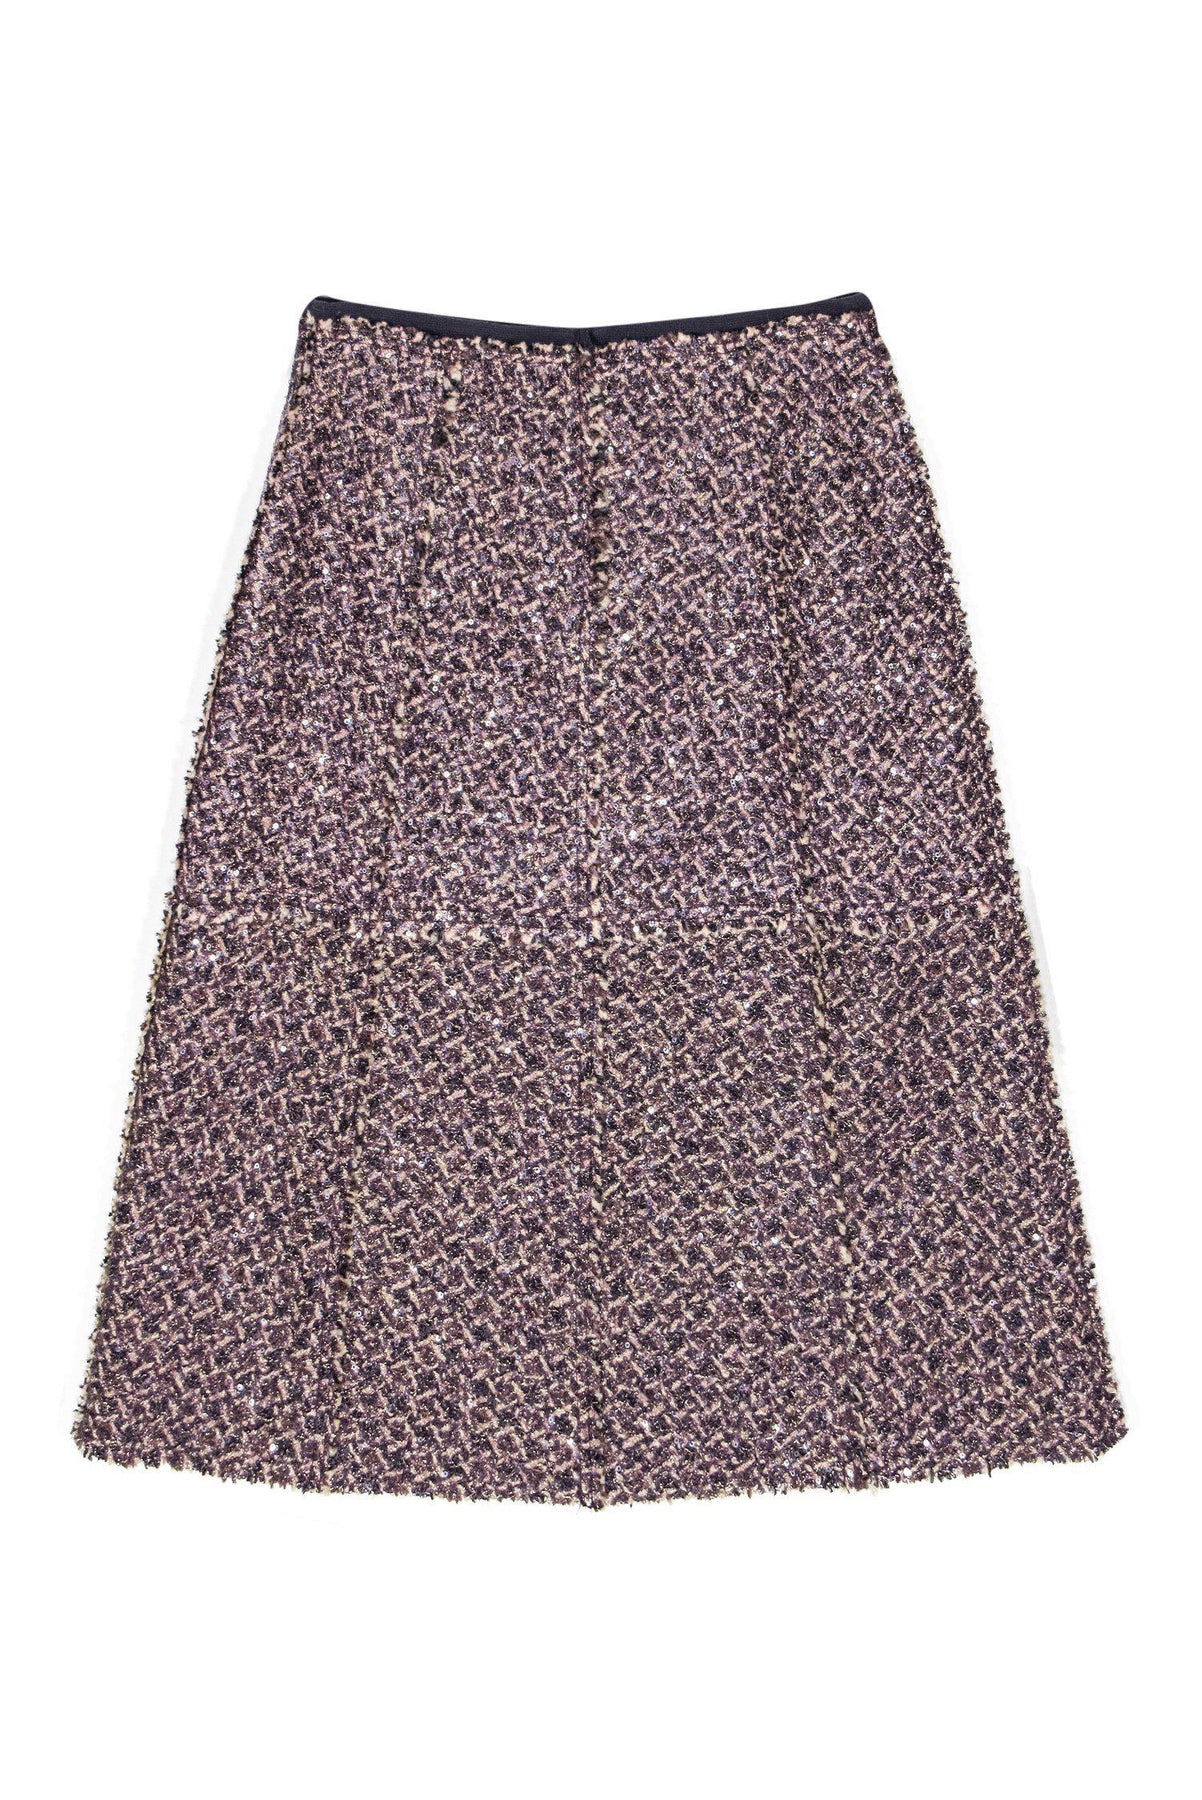 Tory Burch - Purple Tweed Midi Skirt w/ Sequins Sz 6 – Current Boutique